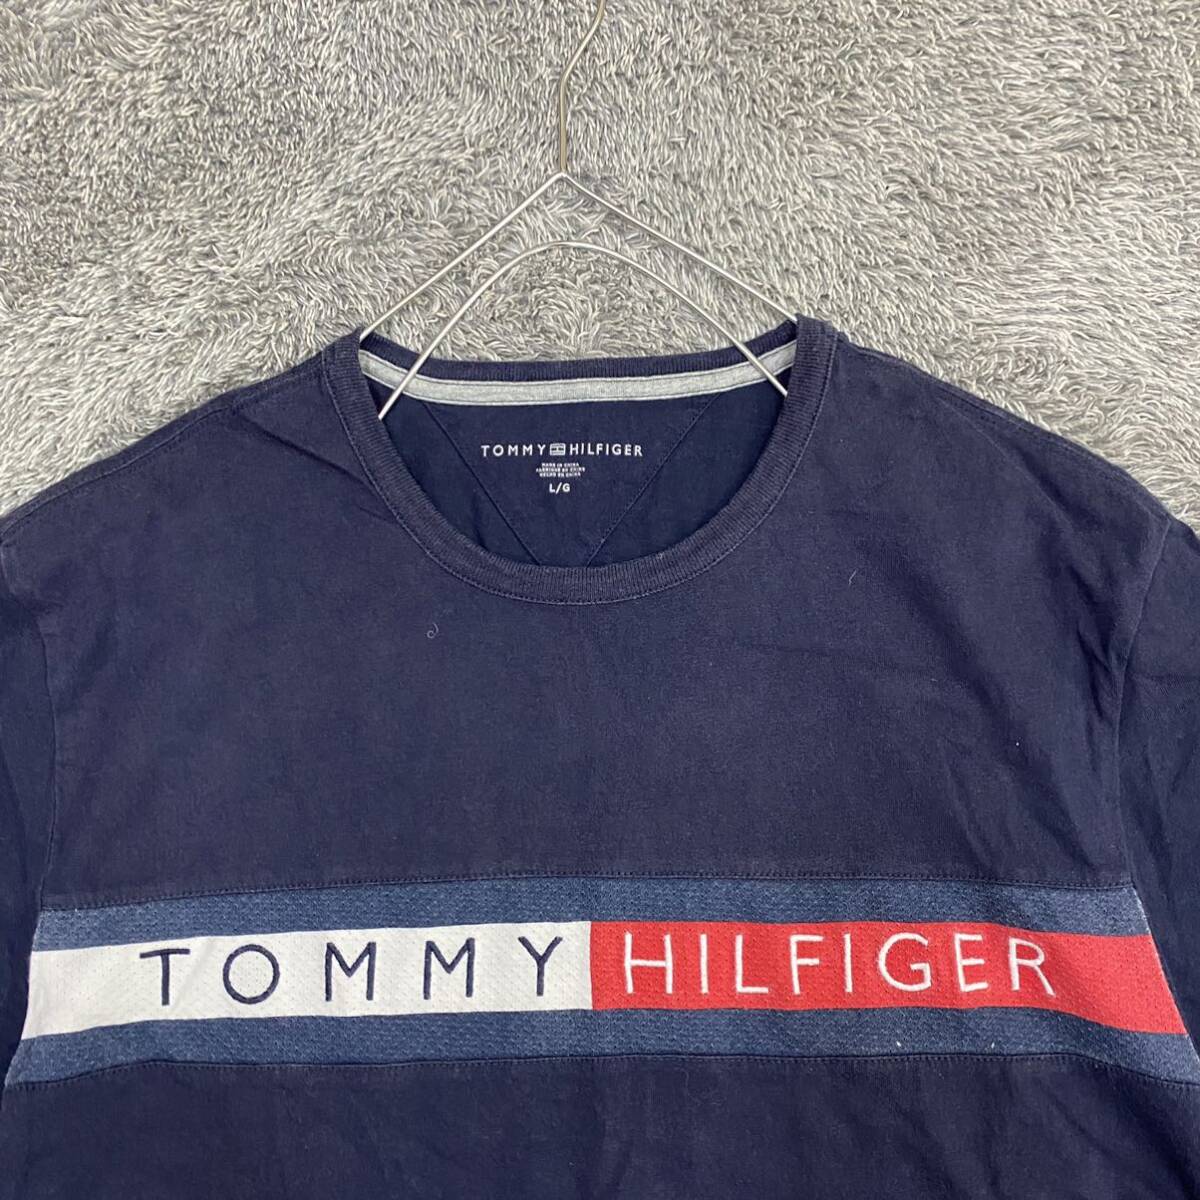 TOMMYHILFIGER トミーヒルフィガー Tシャツ 半袖カットソー サイズL ネイビー 紺色 メンズ トップス 最落なし （U18）の画像3